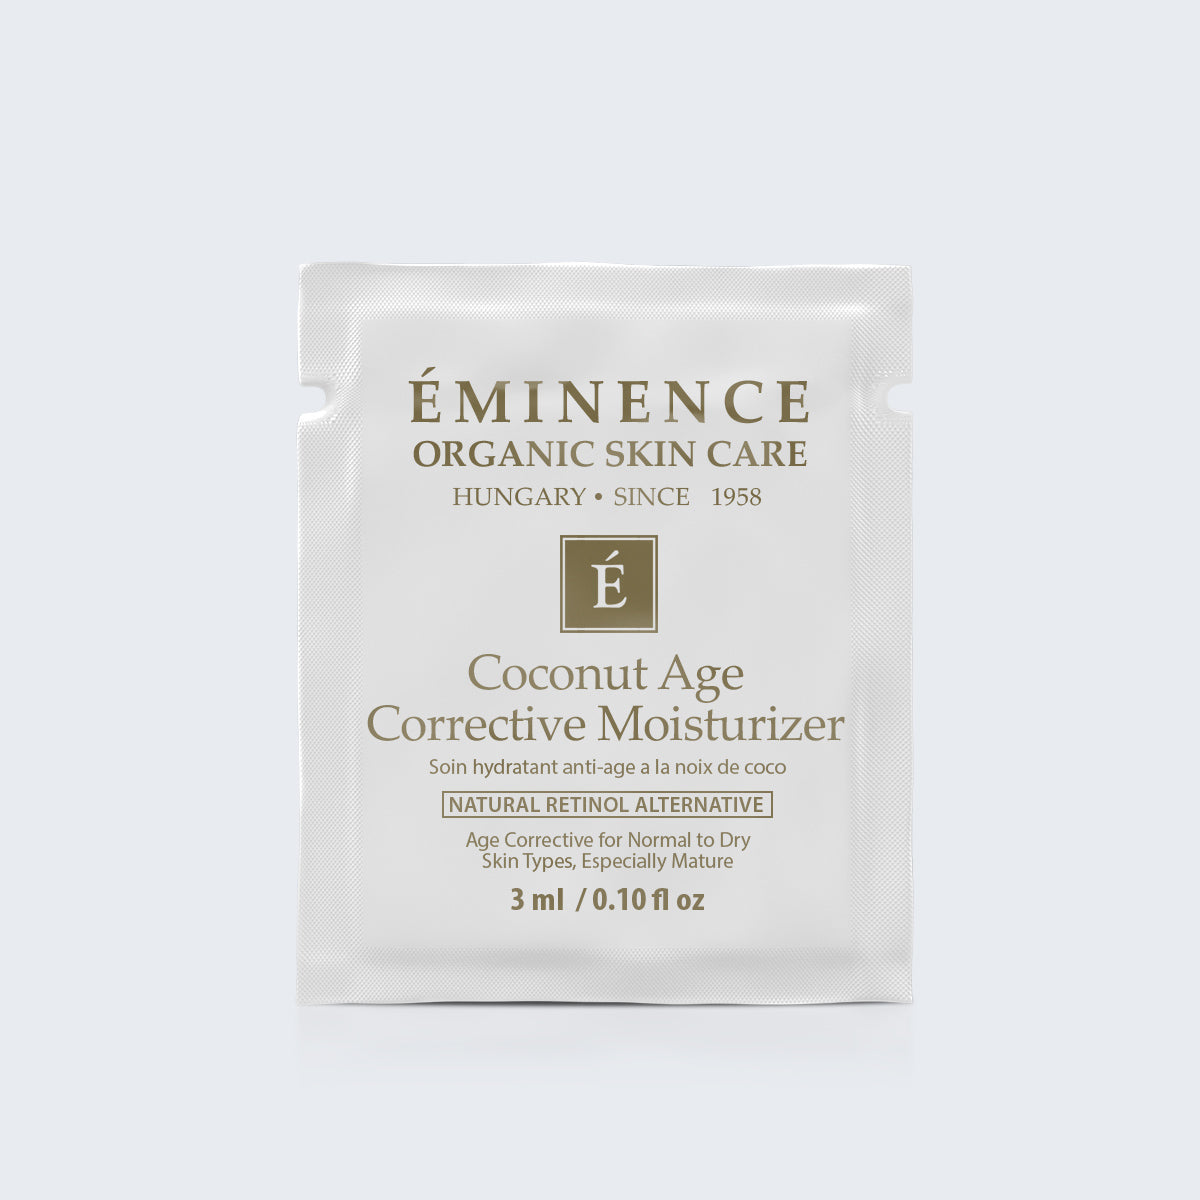 Eminence Organics Coconut Age Corrective Moisturizer Card Sample